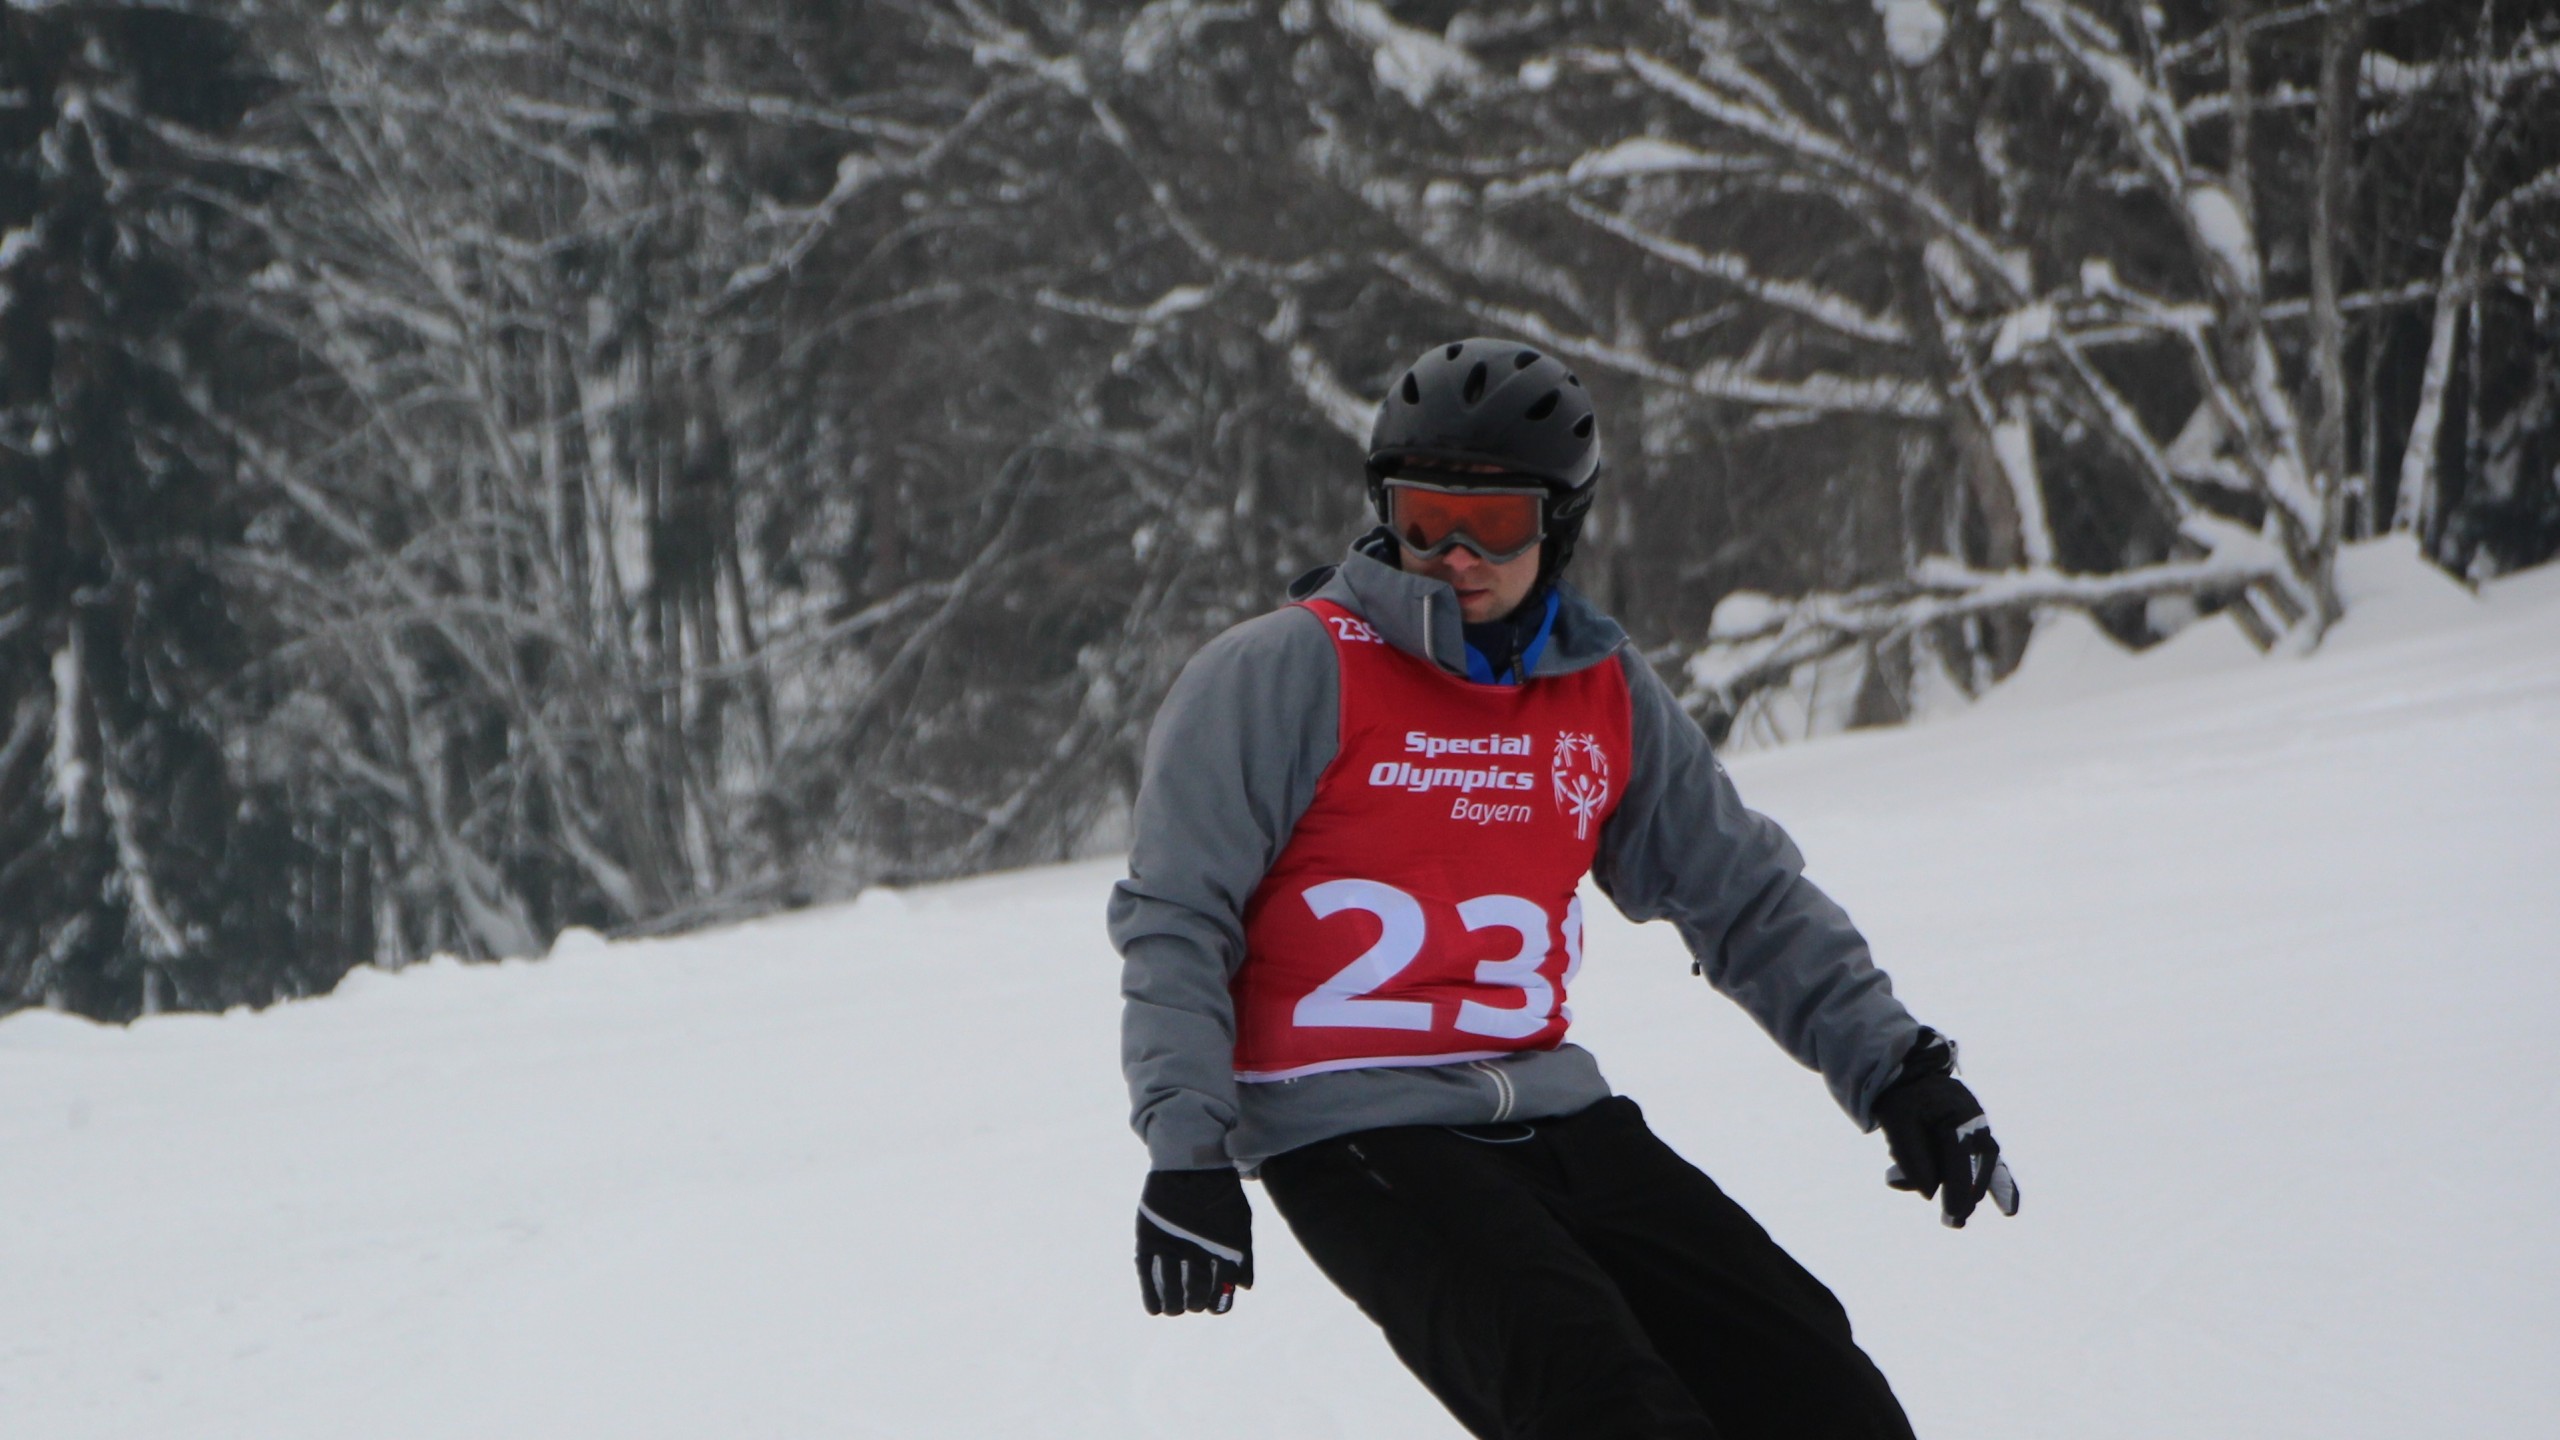 Special Olympics Winterspiele